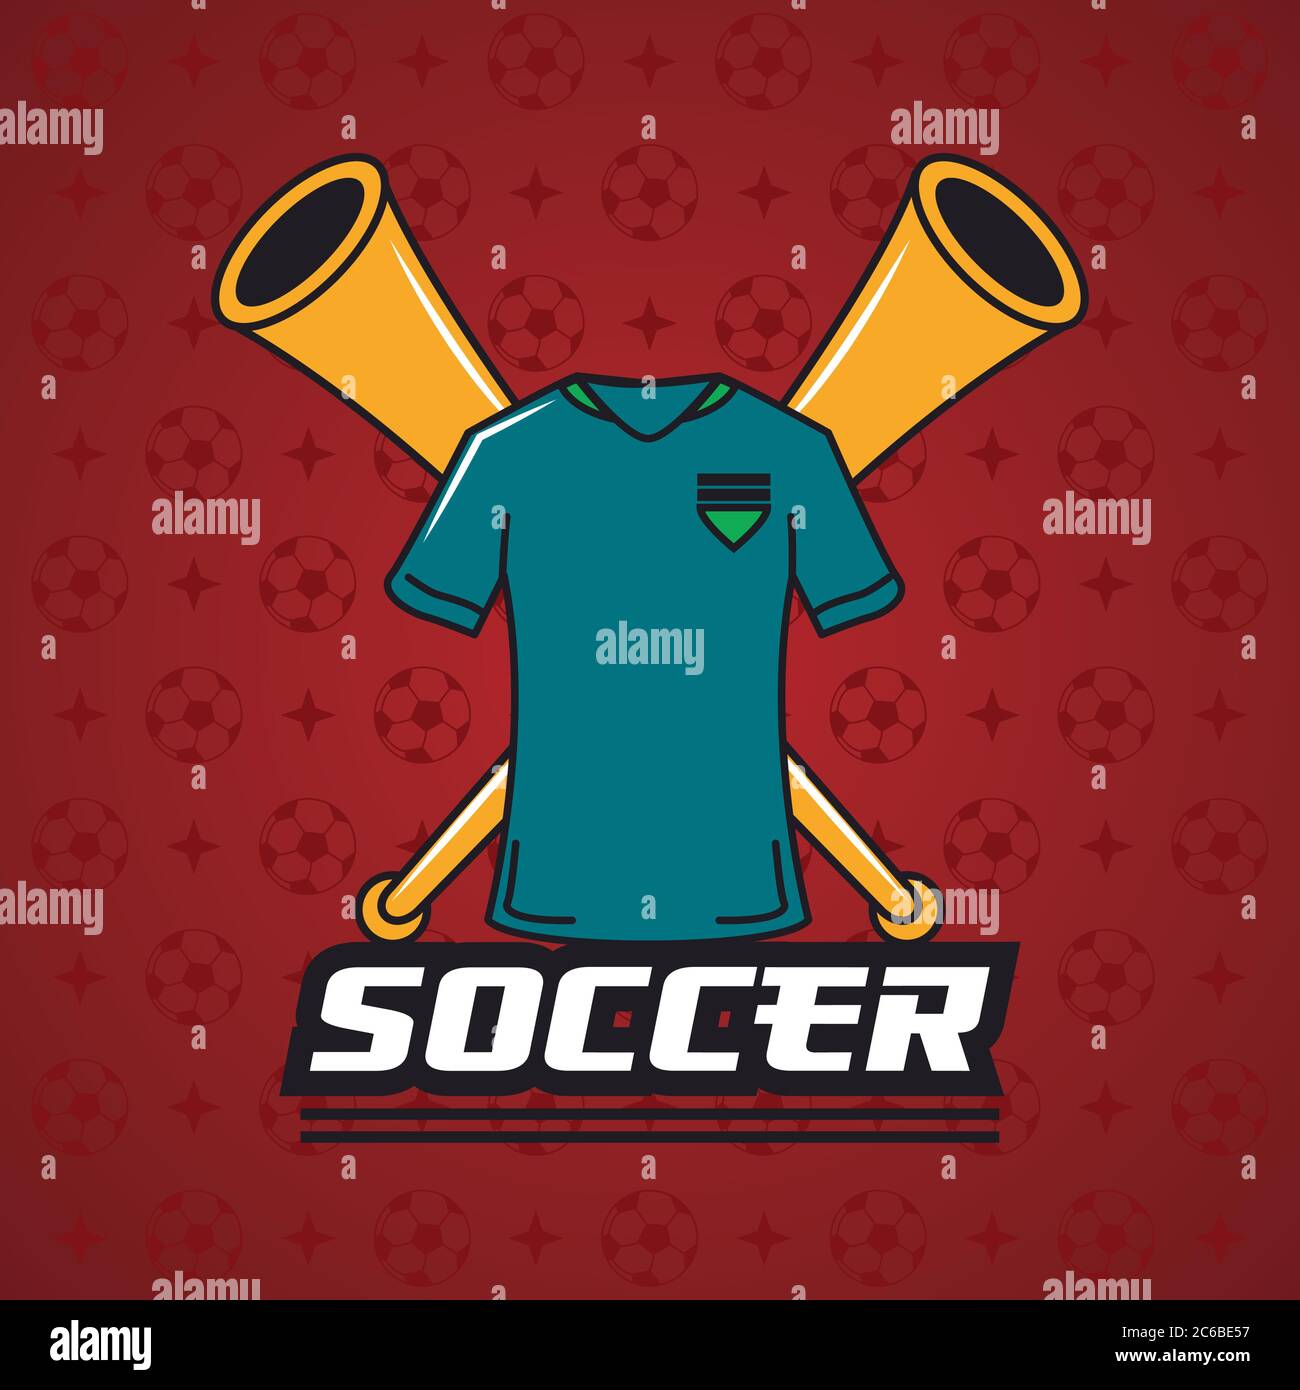 football soccer sport poster with cornets vector illustration design Stock Vector